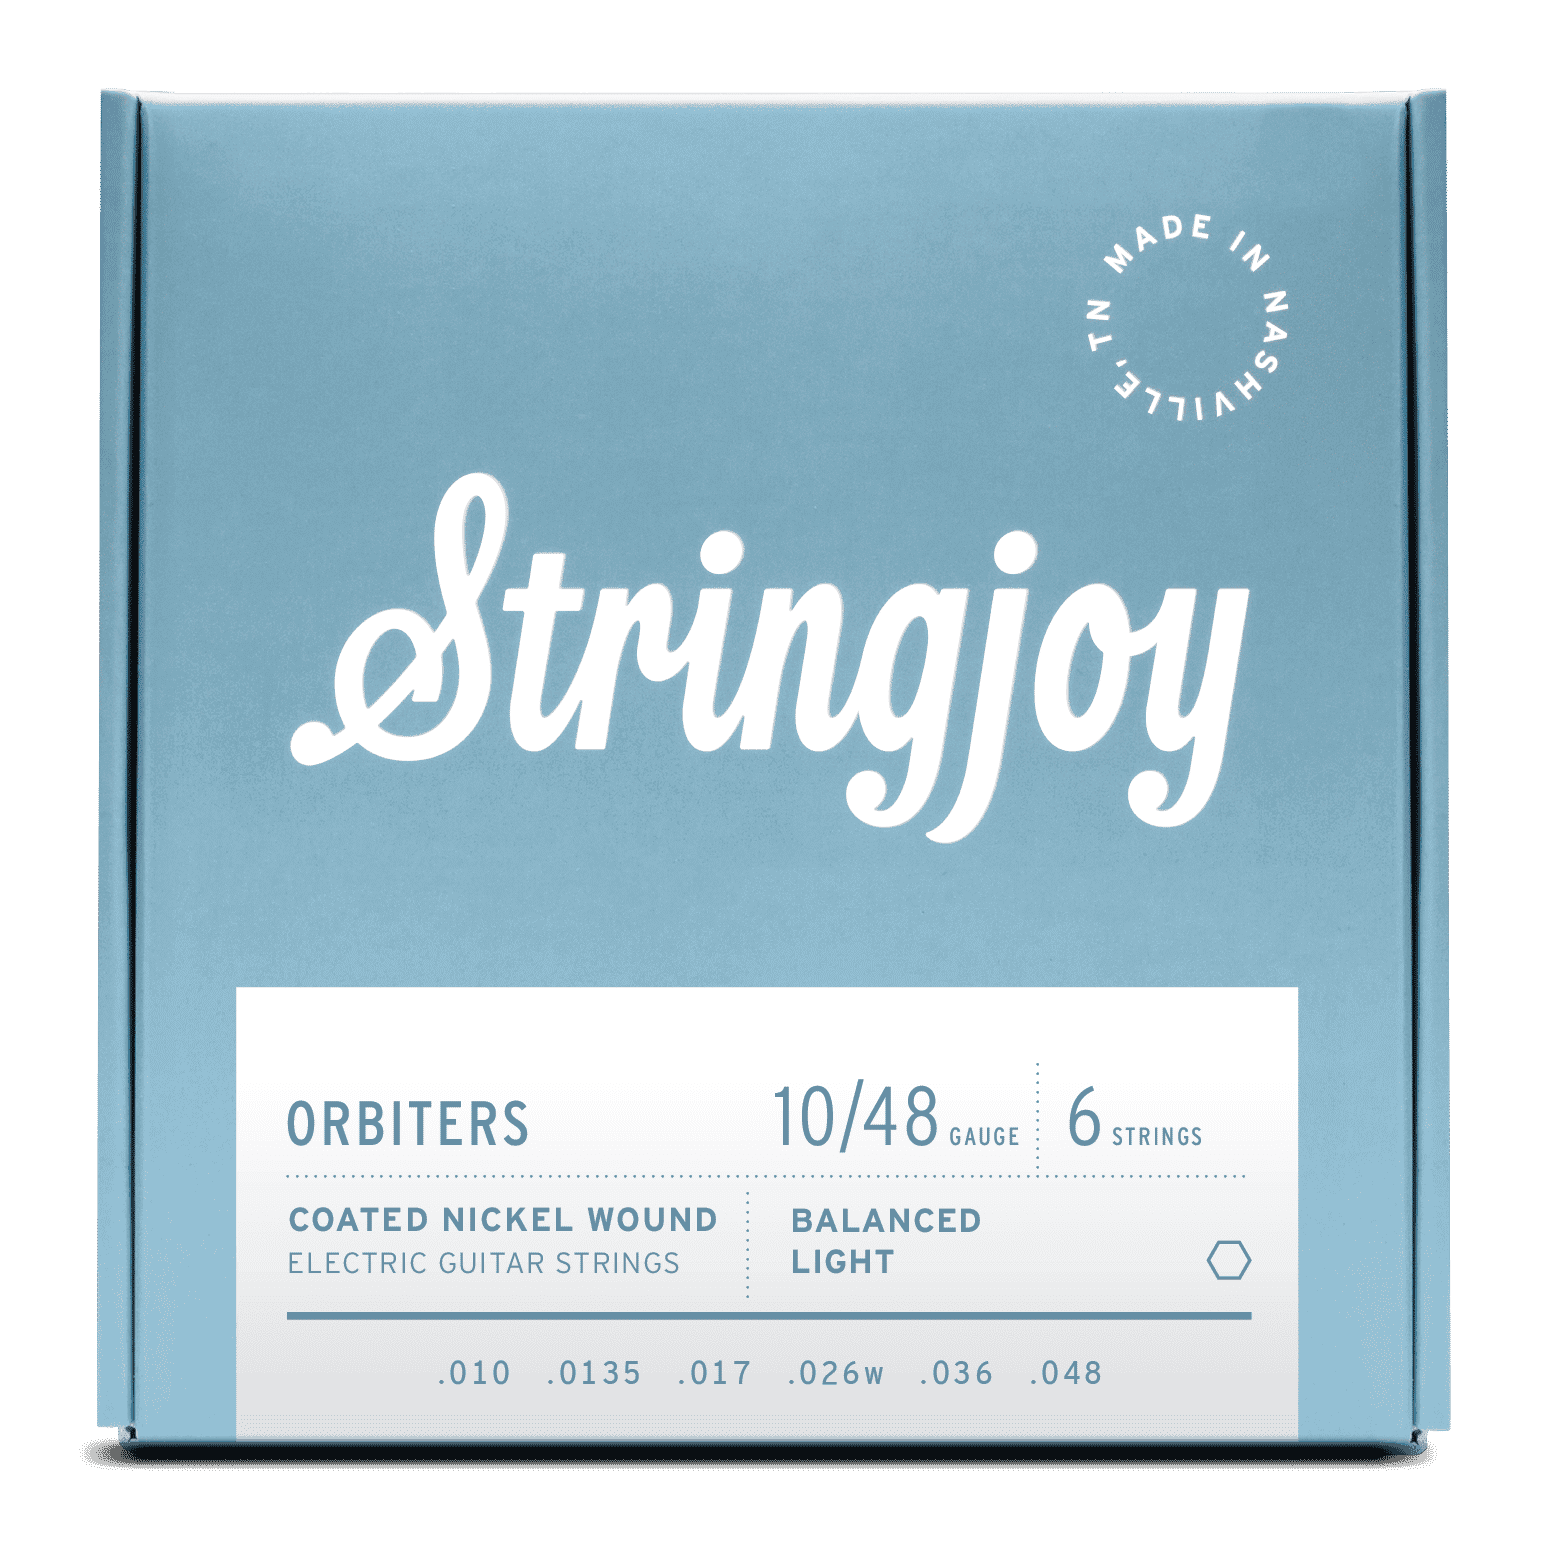 Stringjoy Orbiters | Balanced Light Gauge (10-48) Coated Nickel Wound Electric Guitar Strings | Jack's On Queen